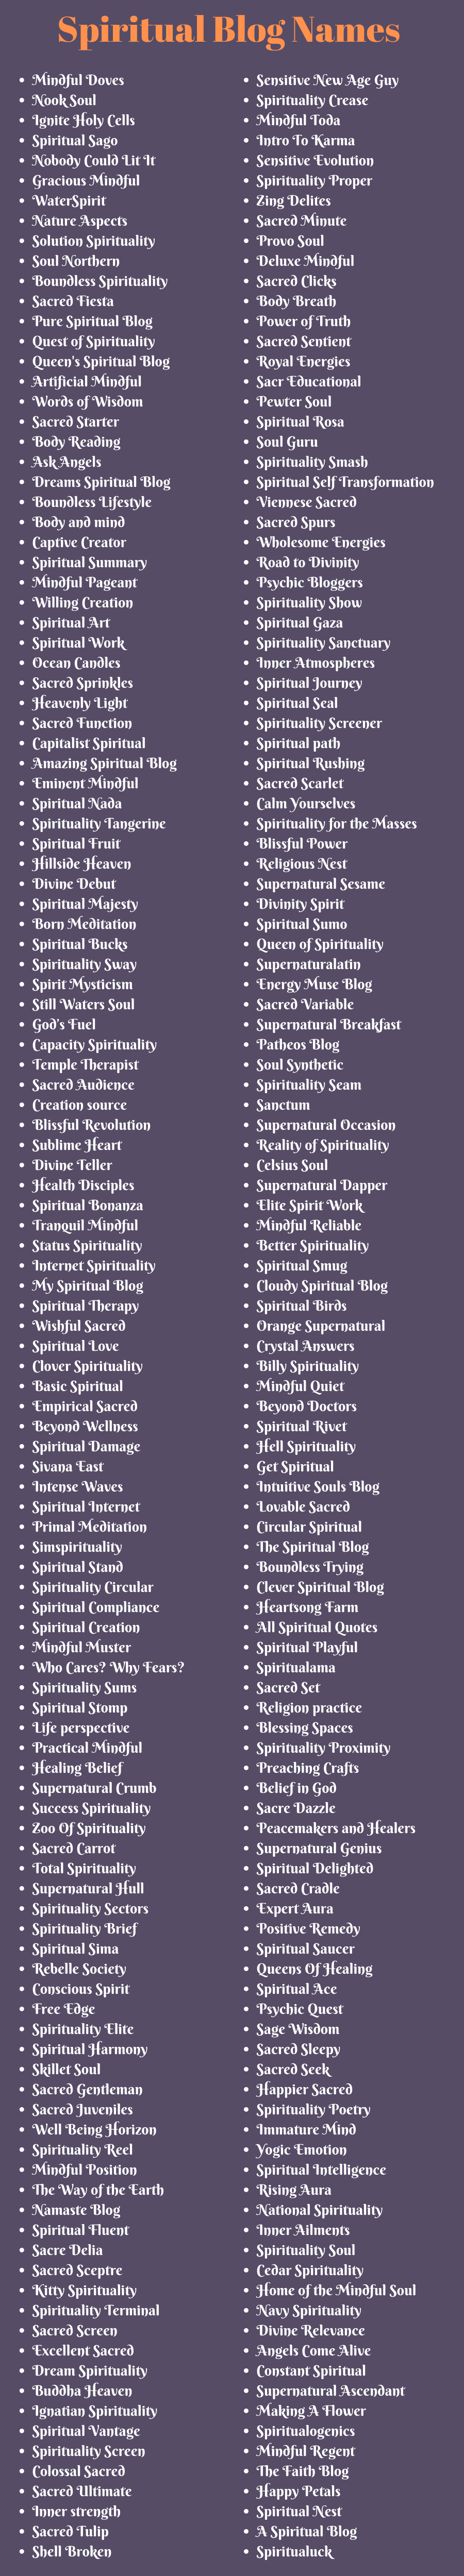 Spiritual Blog Names